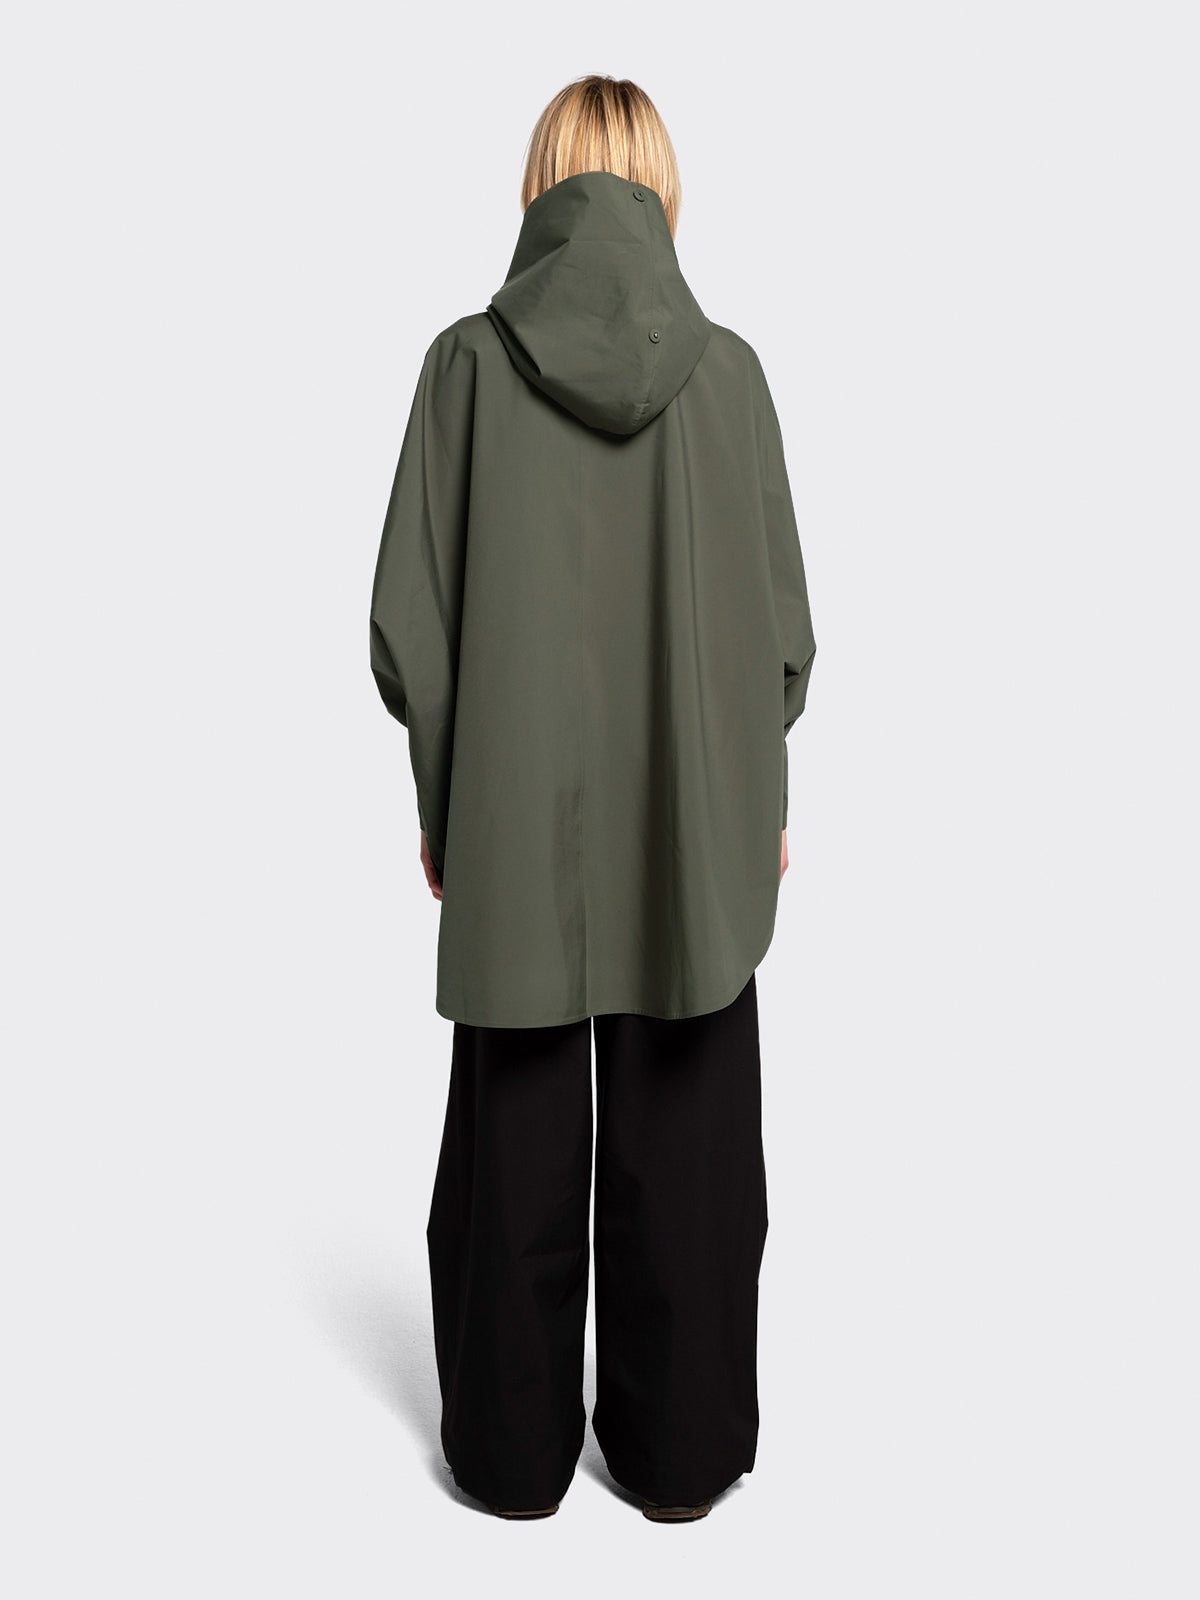 Woman dressed in Bergen poncho by Blæst in Dusty Green